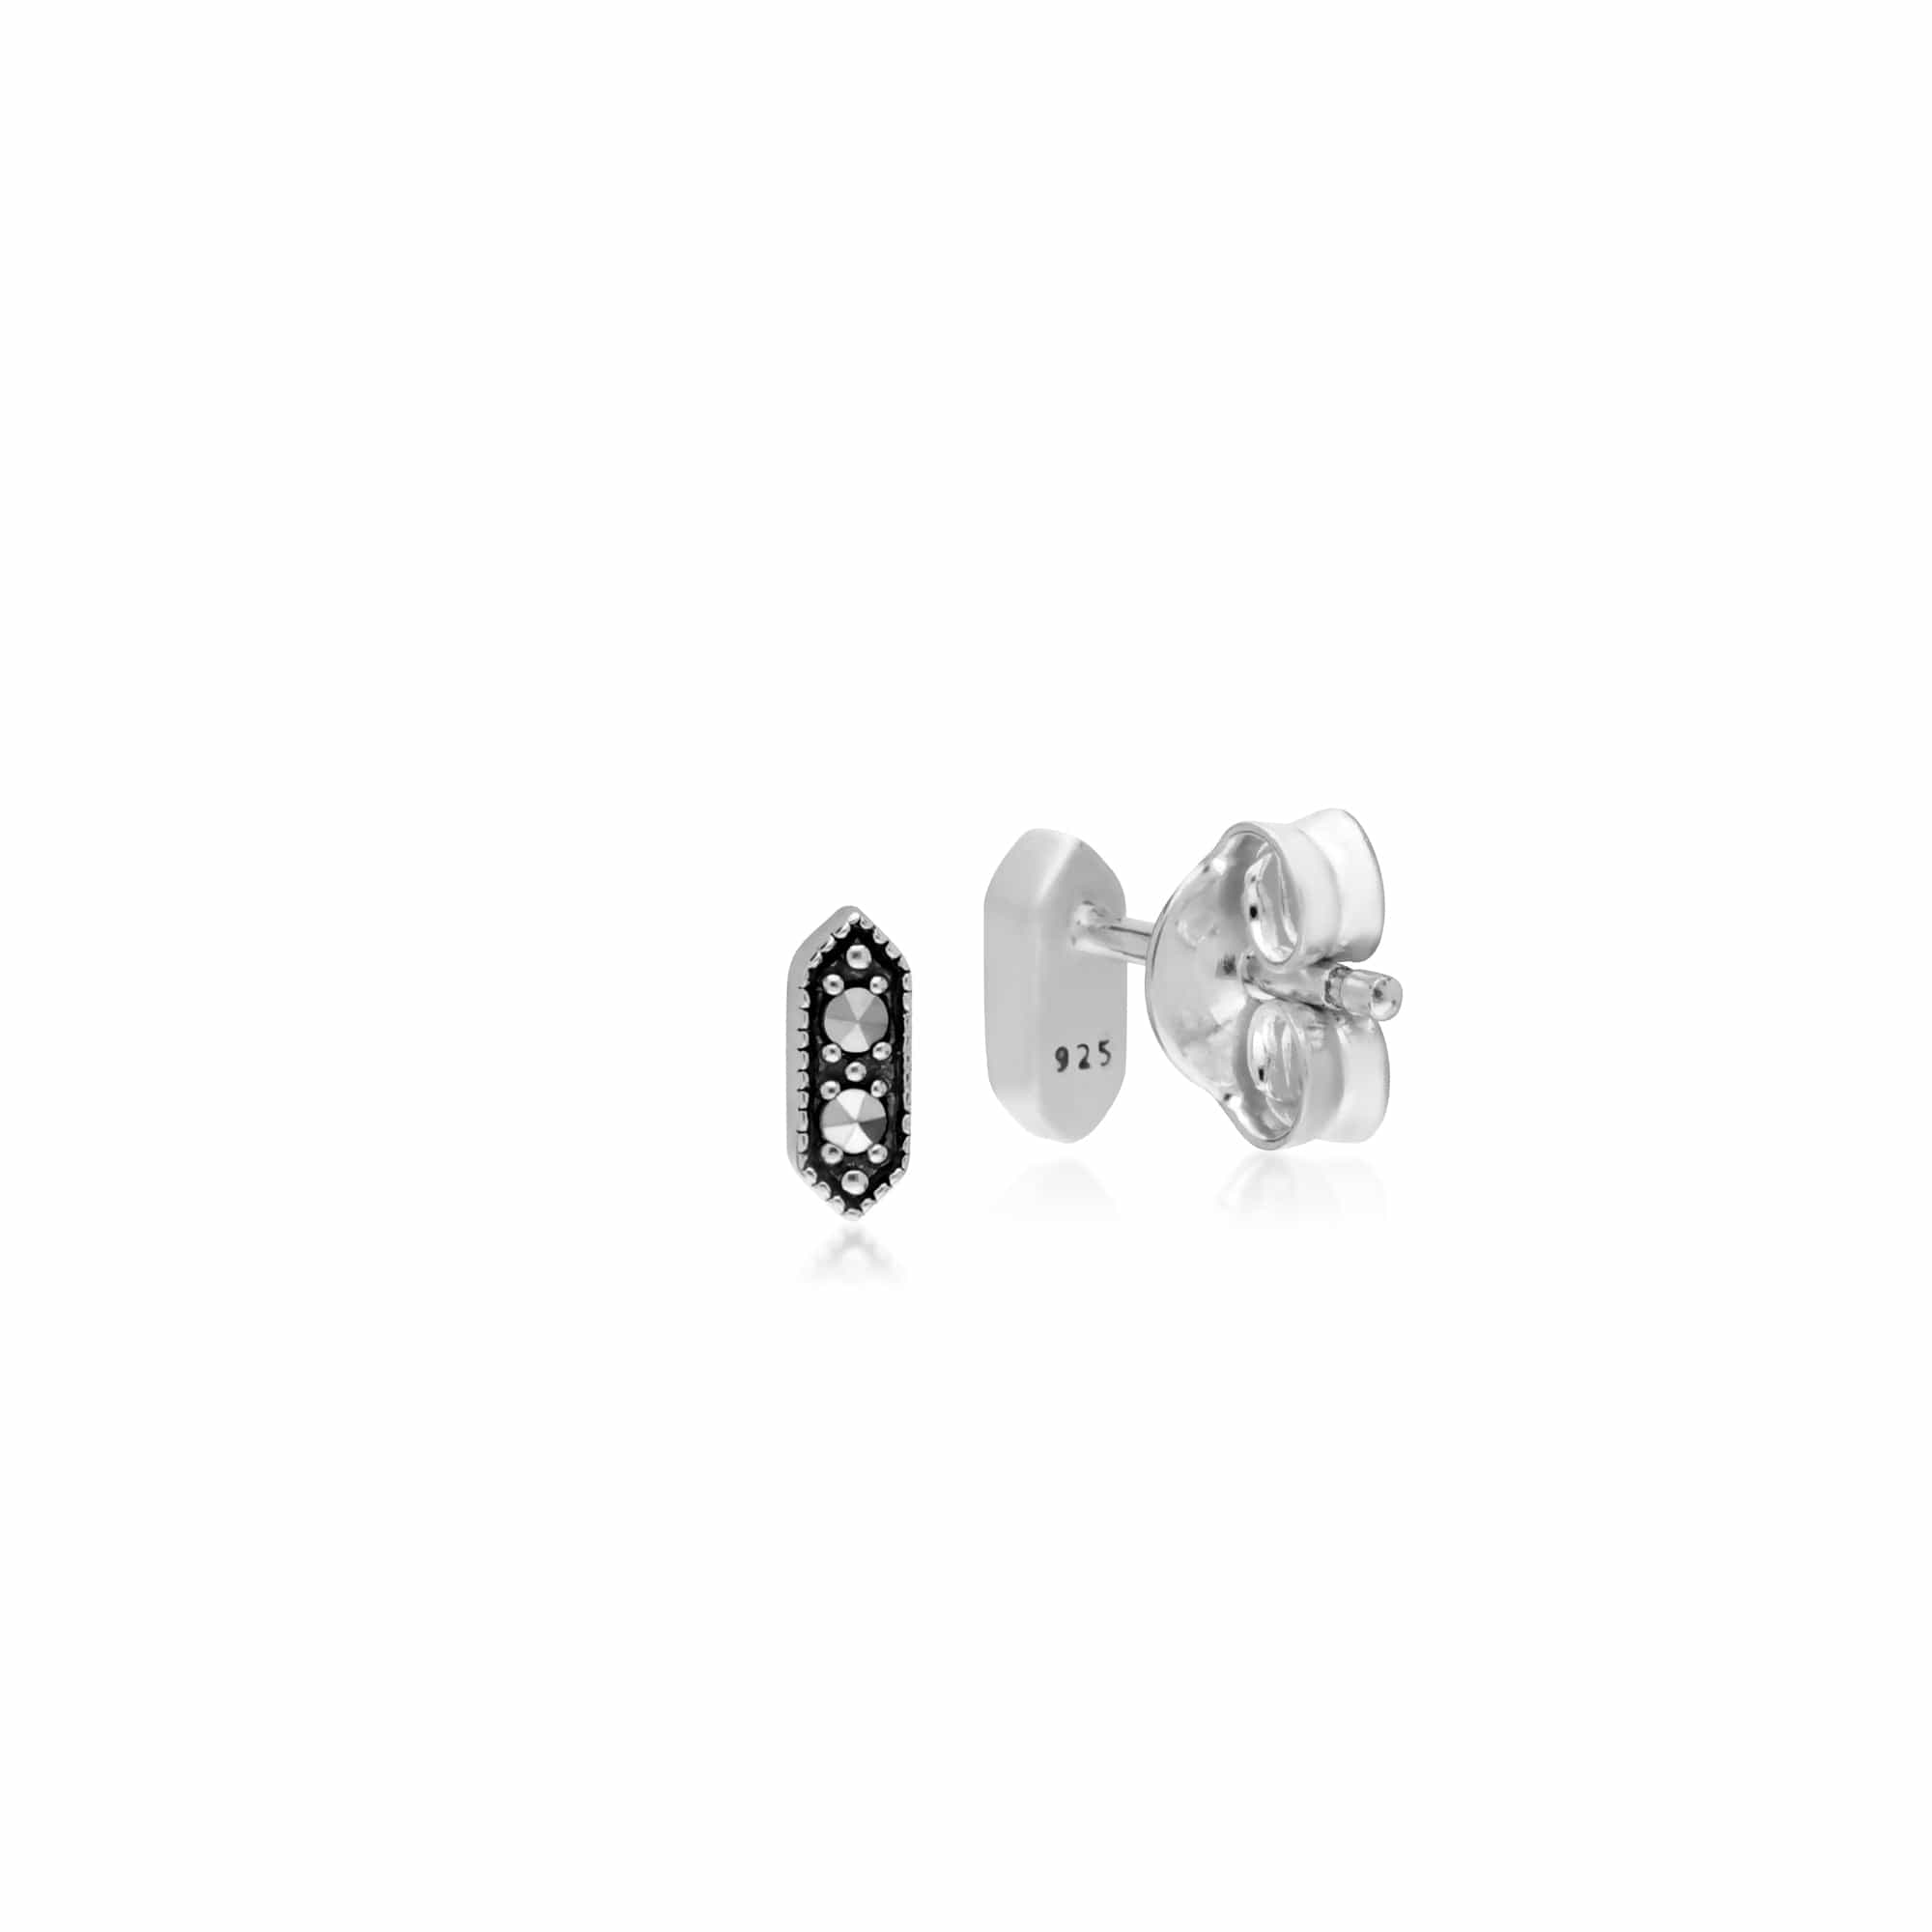 Geometric Round Marcasite Hexagon Stud Earrings in 925 Sterling Silver - Gemondo